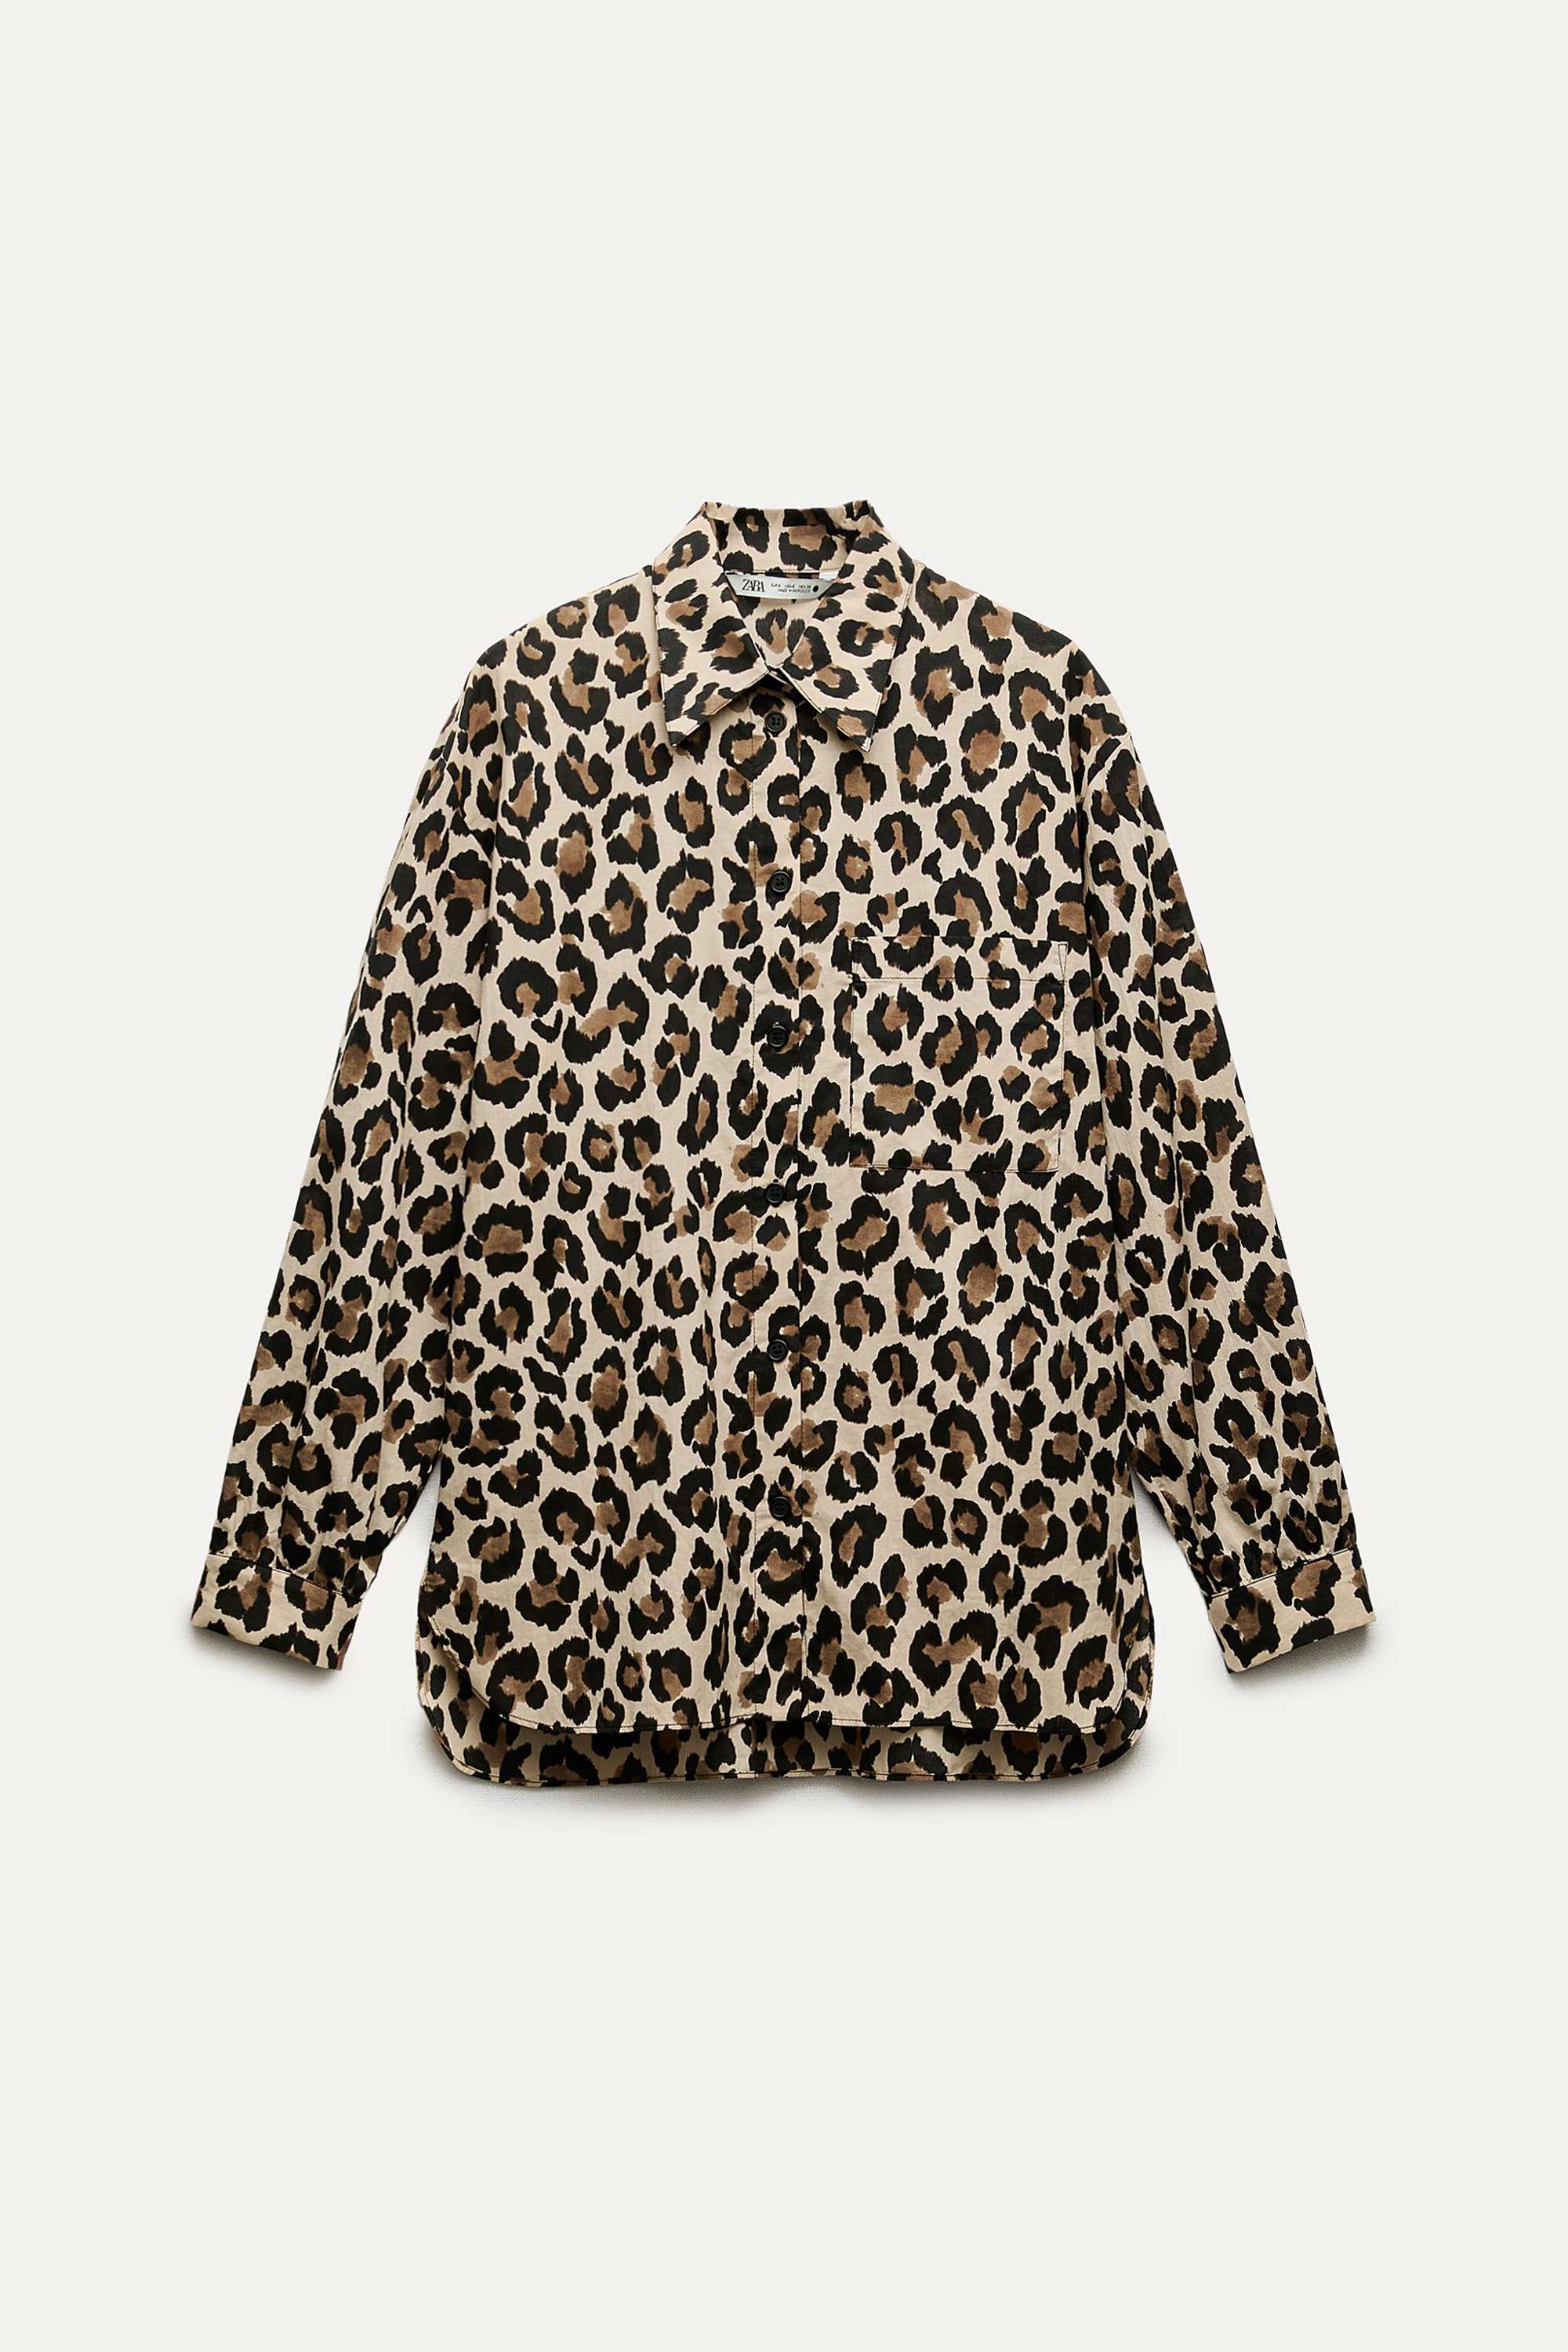 Blusa de leopardo